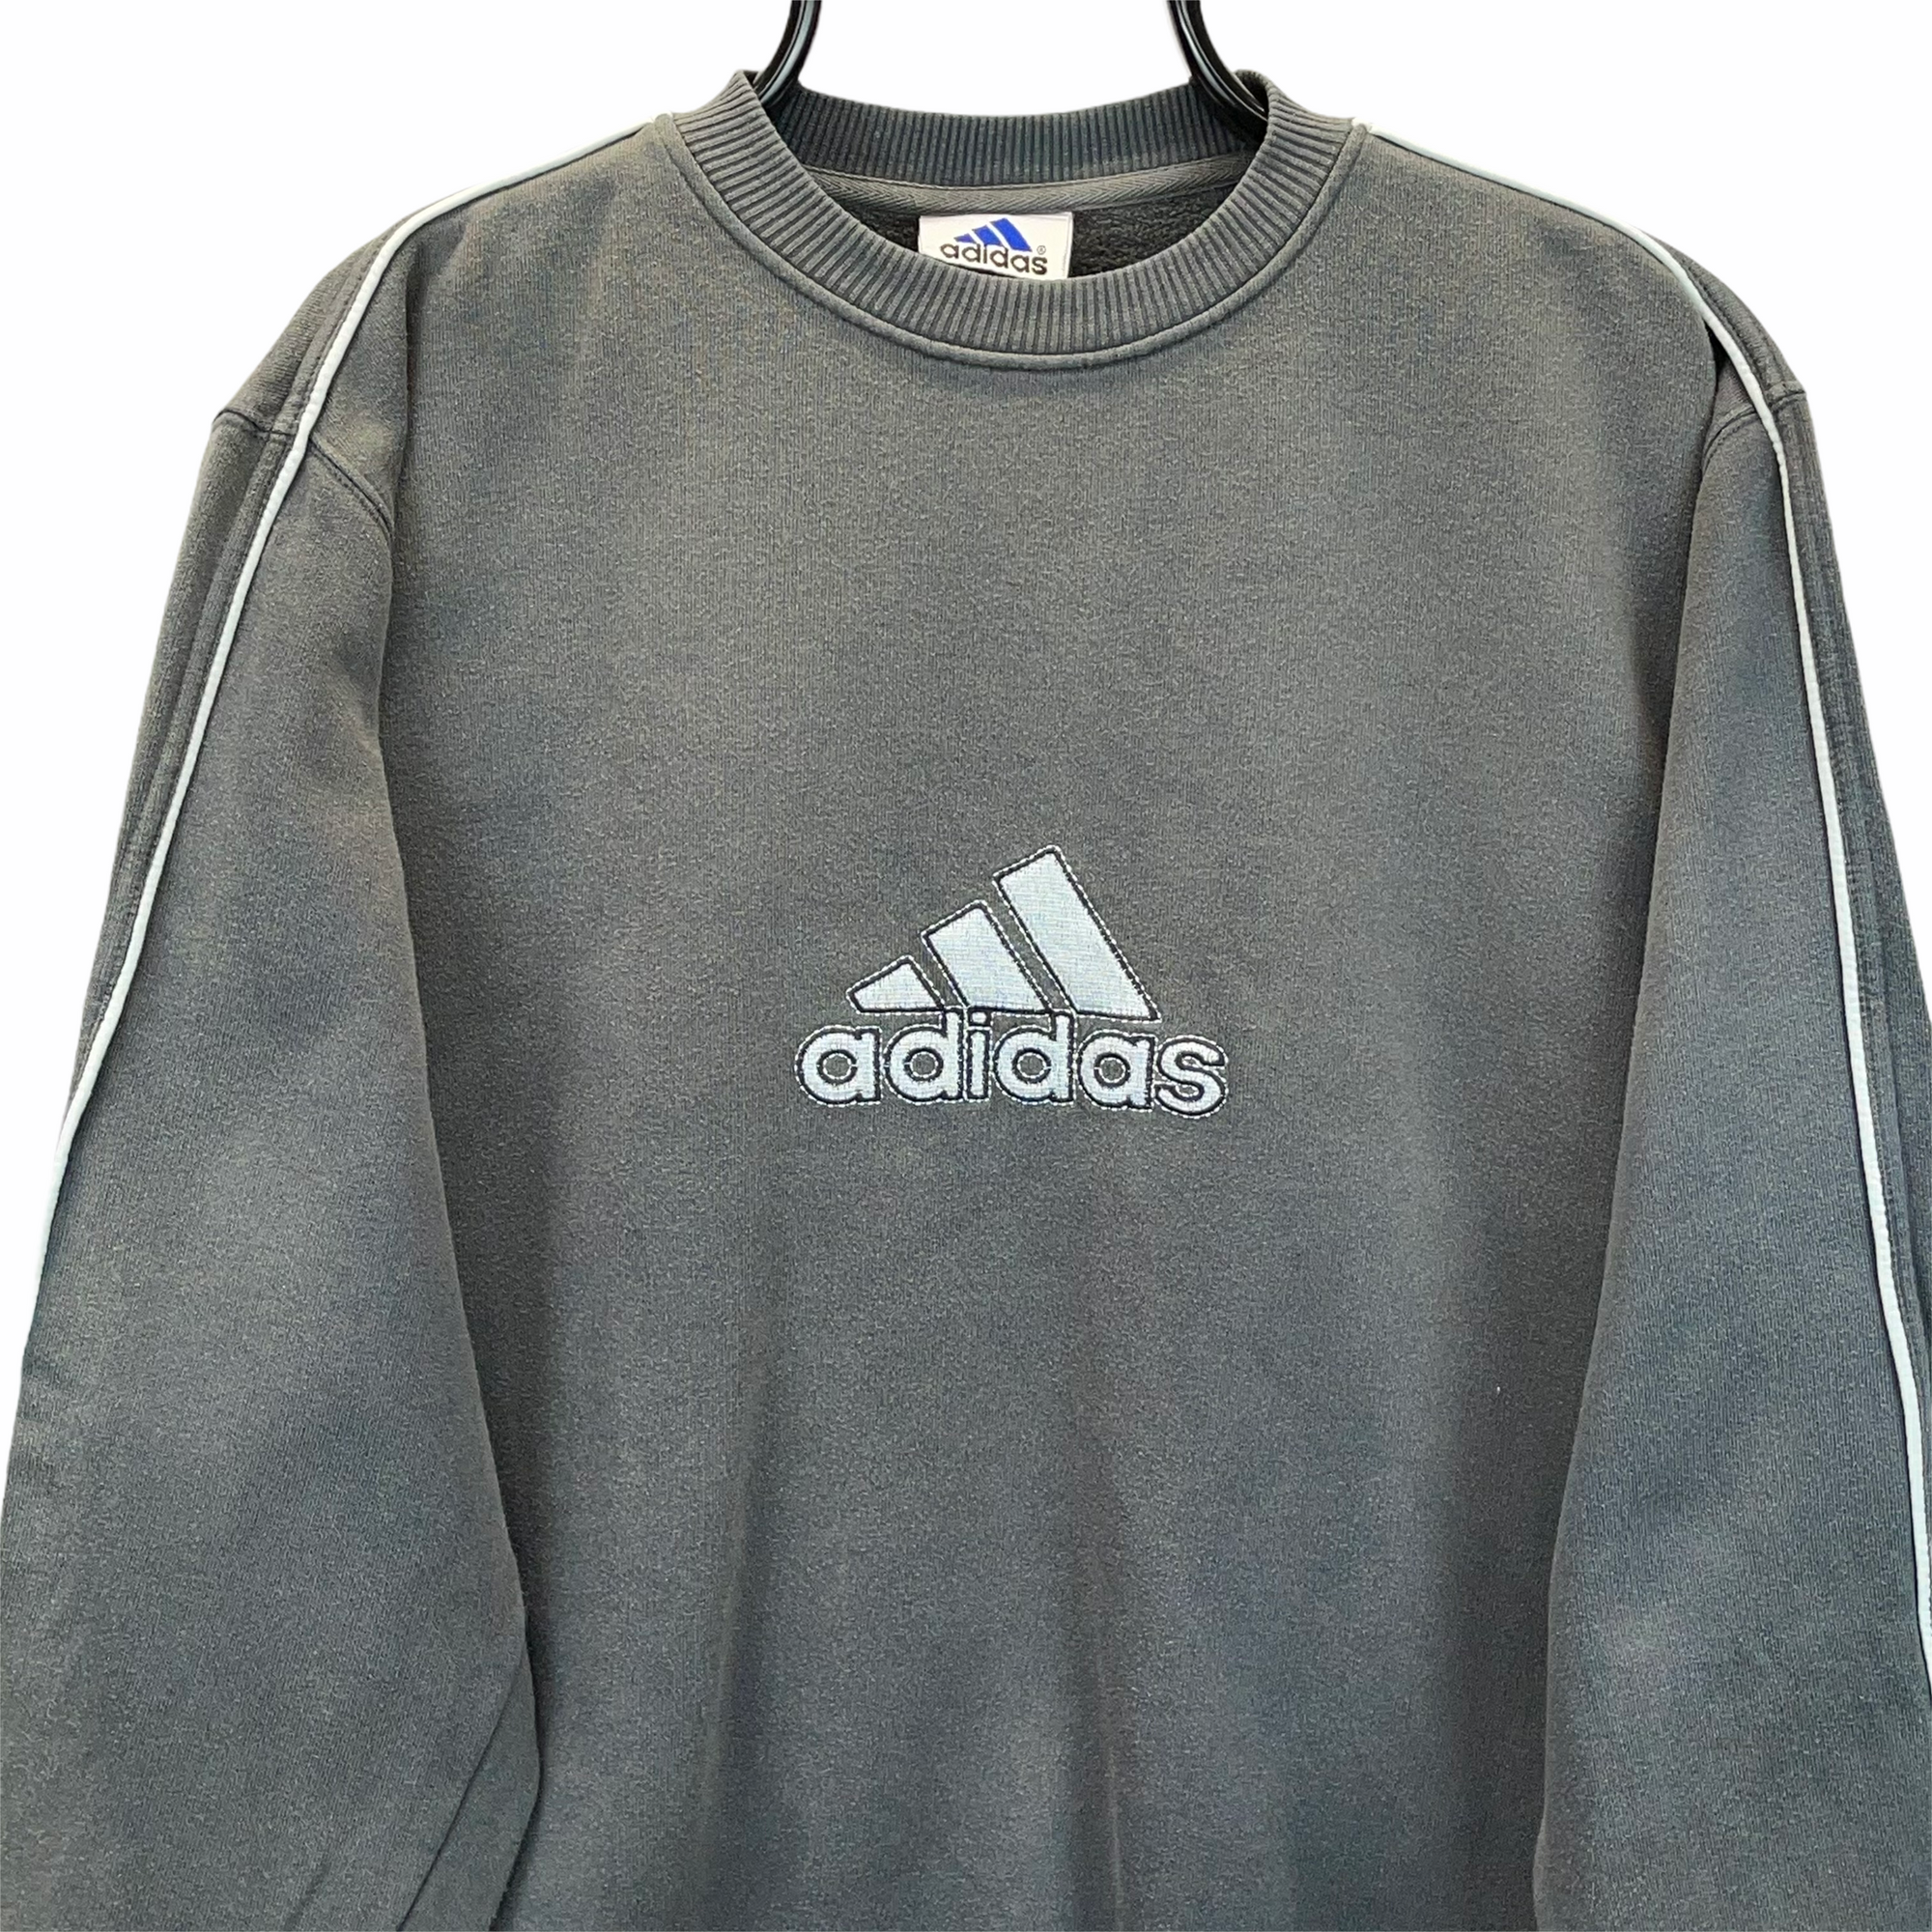 Vintage 90s Adidas Spellout Sweatshirt in Washed Black - Men's Medium/Women's Large